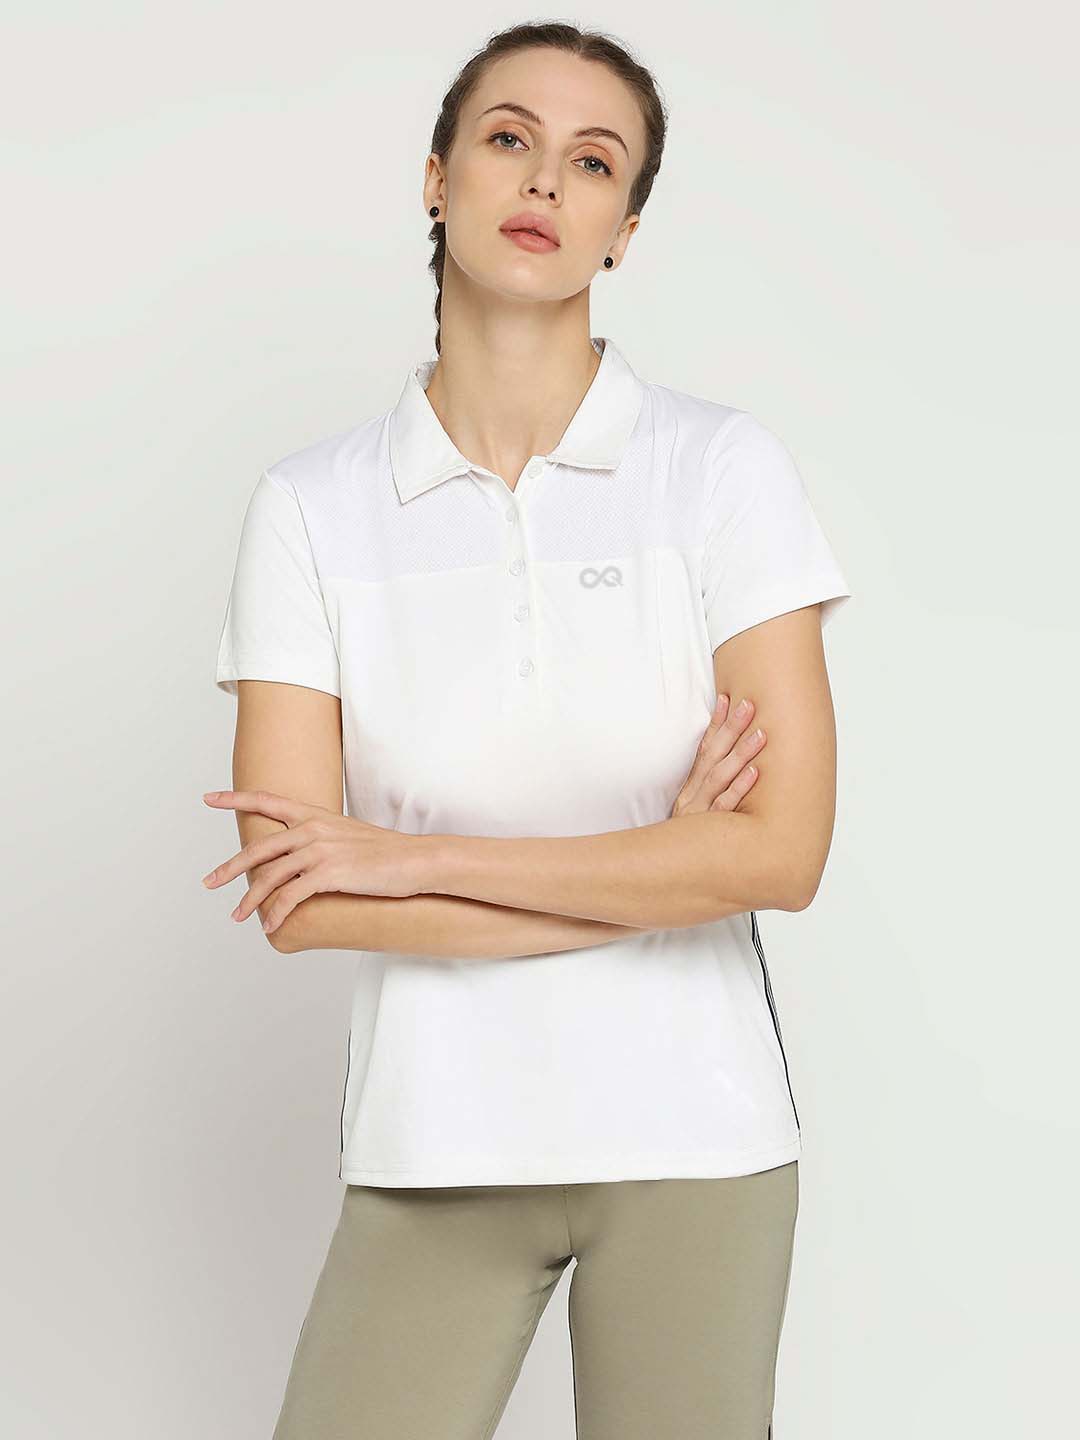 Women's Sports Polo Shirt - White & Navy